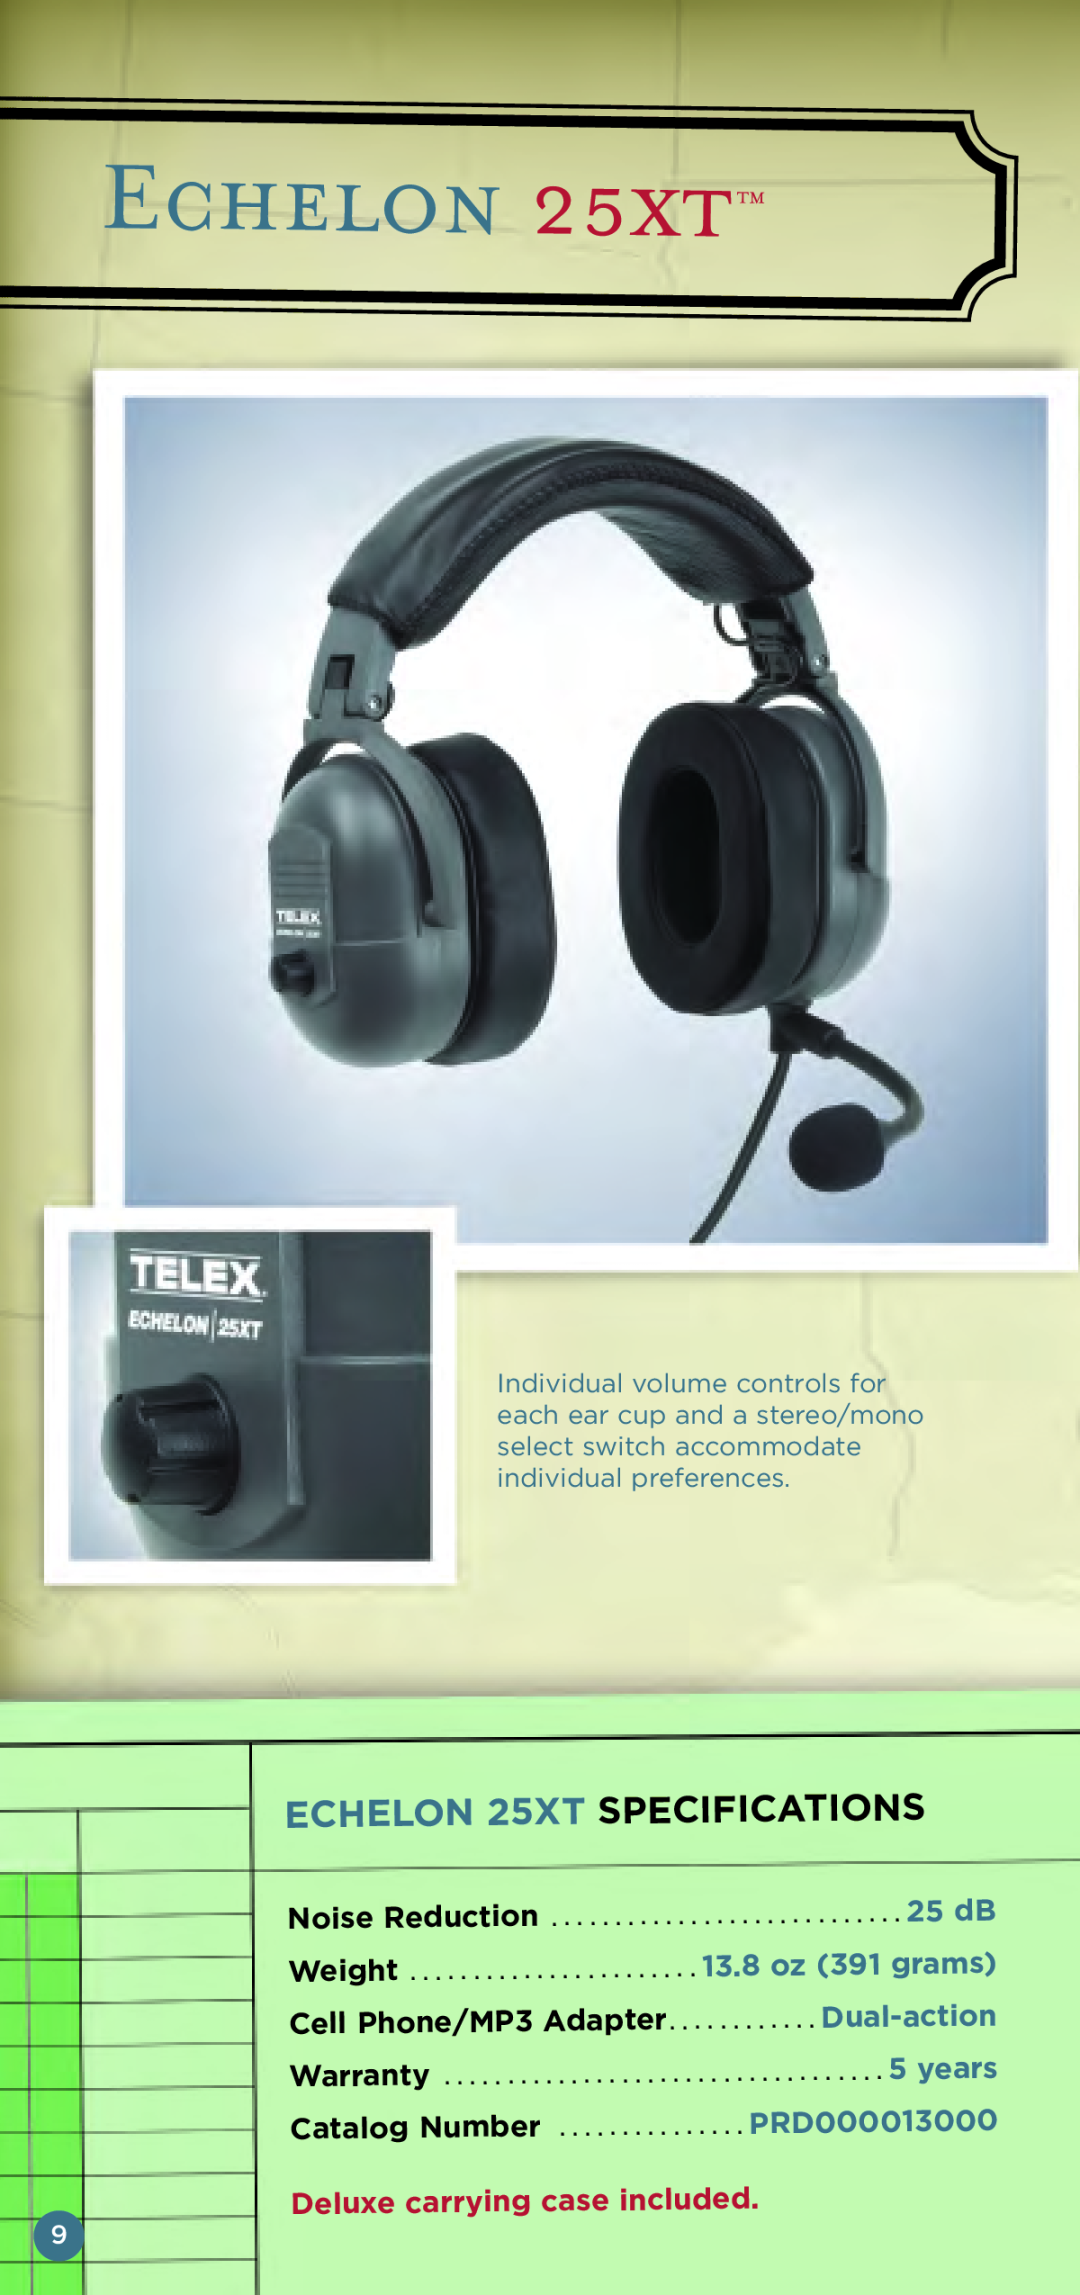 Telex Aviation Headsets Echelon 25xt, ECHELON 25XT SPECIFICATIONS, 13.8 oz 391 grams, PRD000013000, Cell Phone/MP3 Adapter 